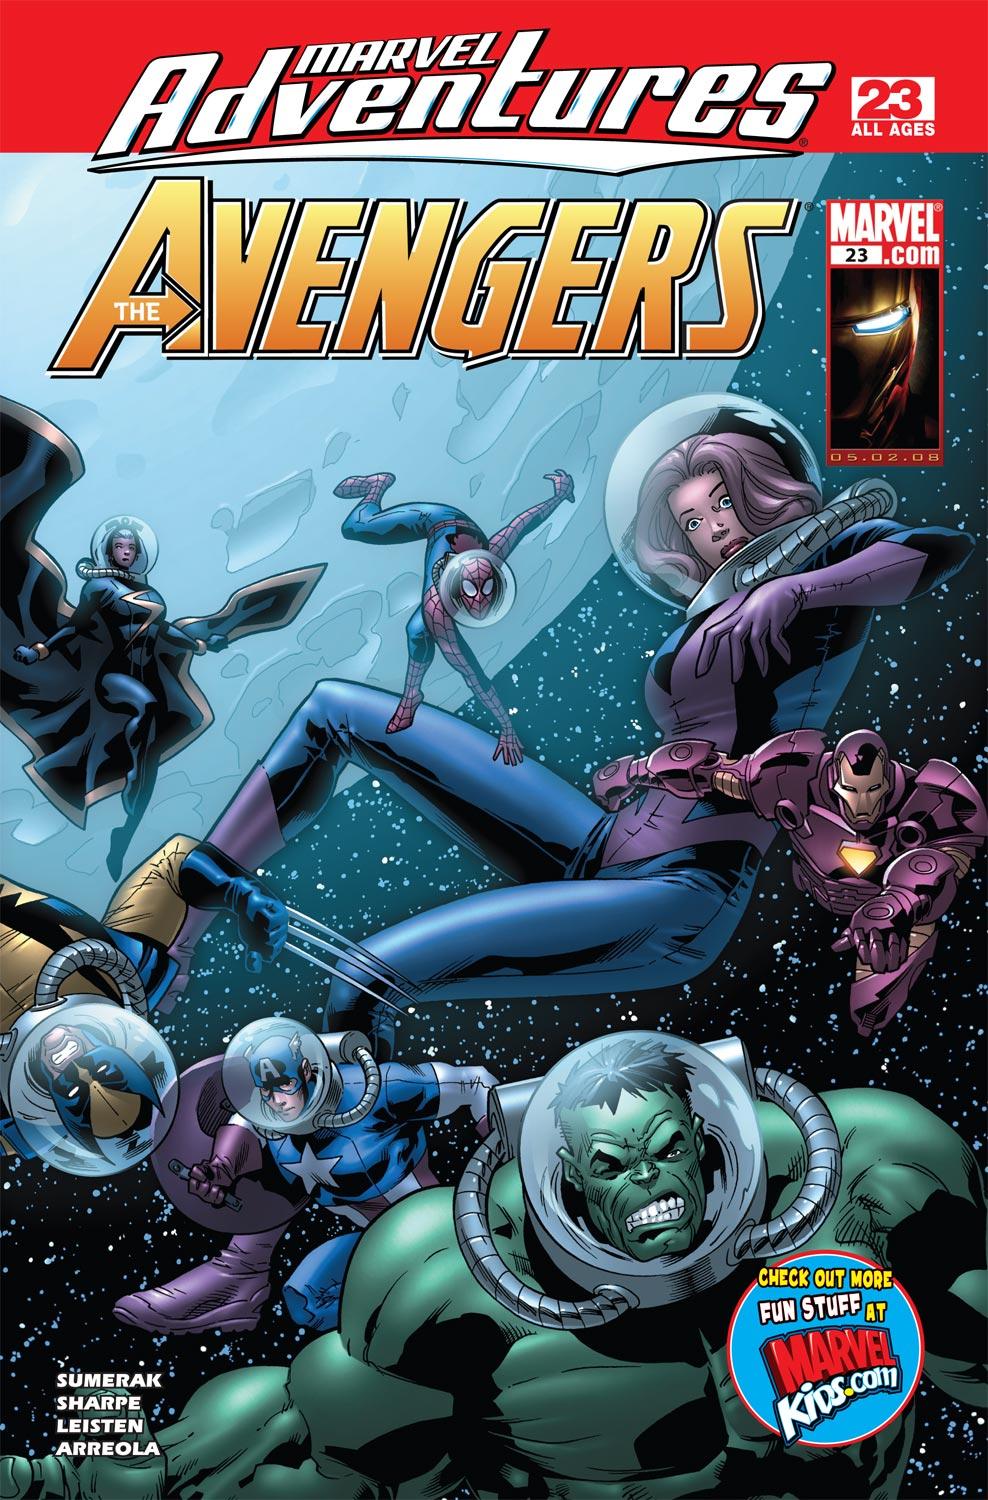 Marvel Adventures the Avengers (2006) #23